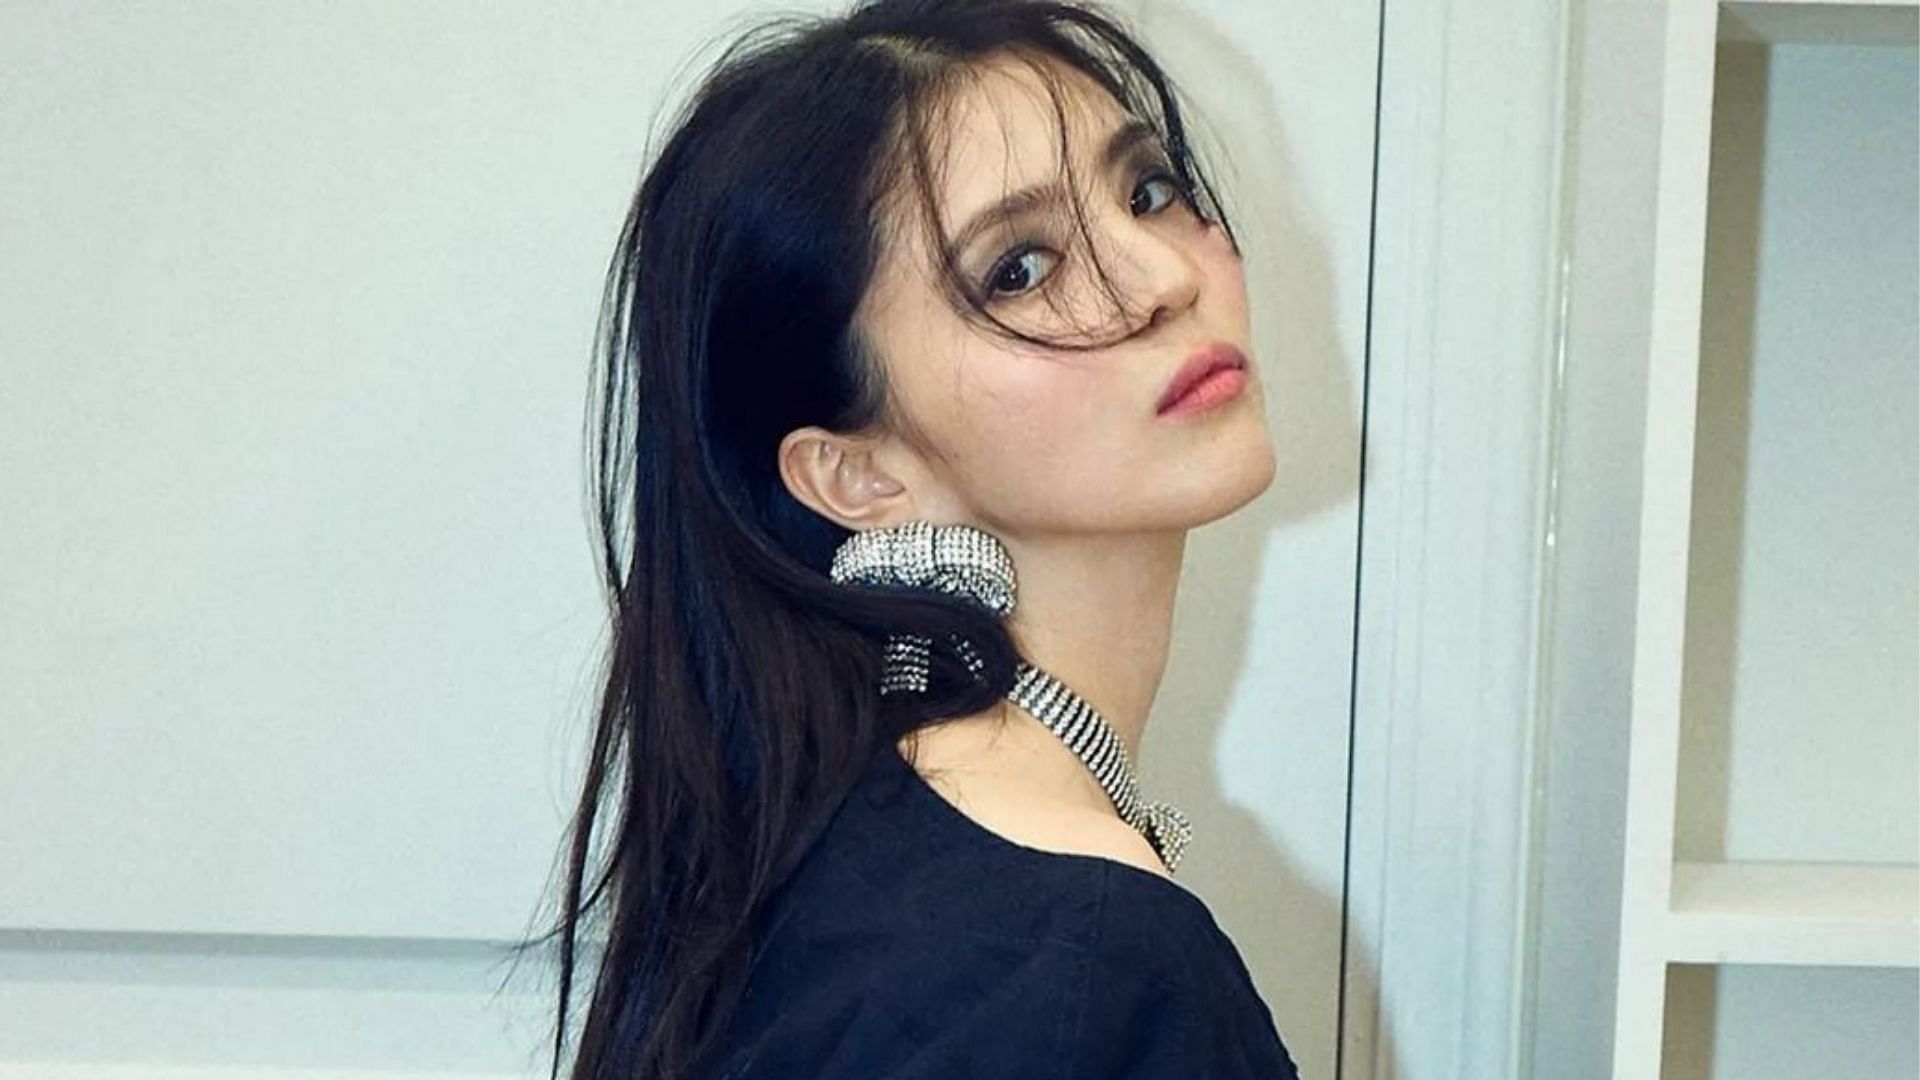 Balenciaga chooses Han So-hee as their first Korean global brand ambassador